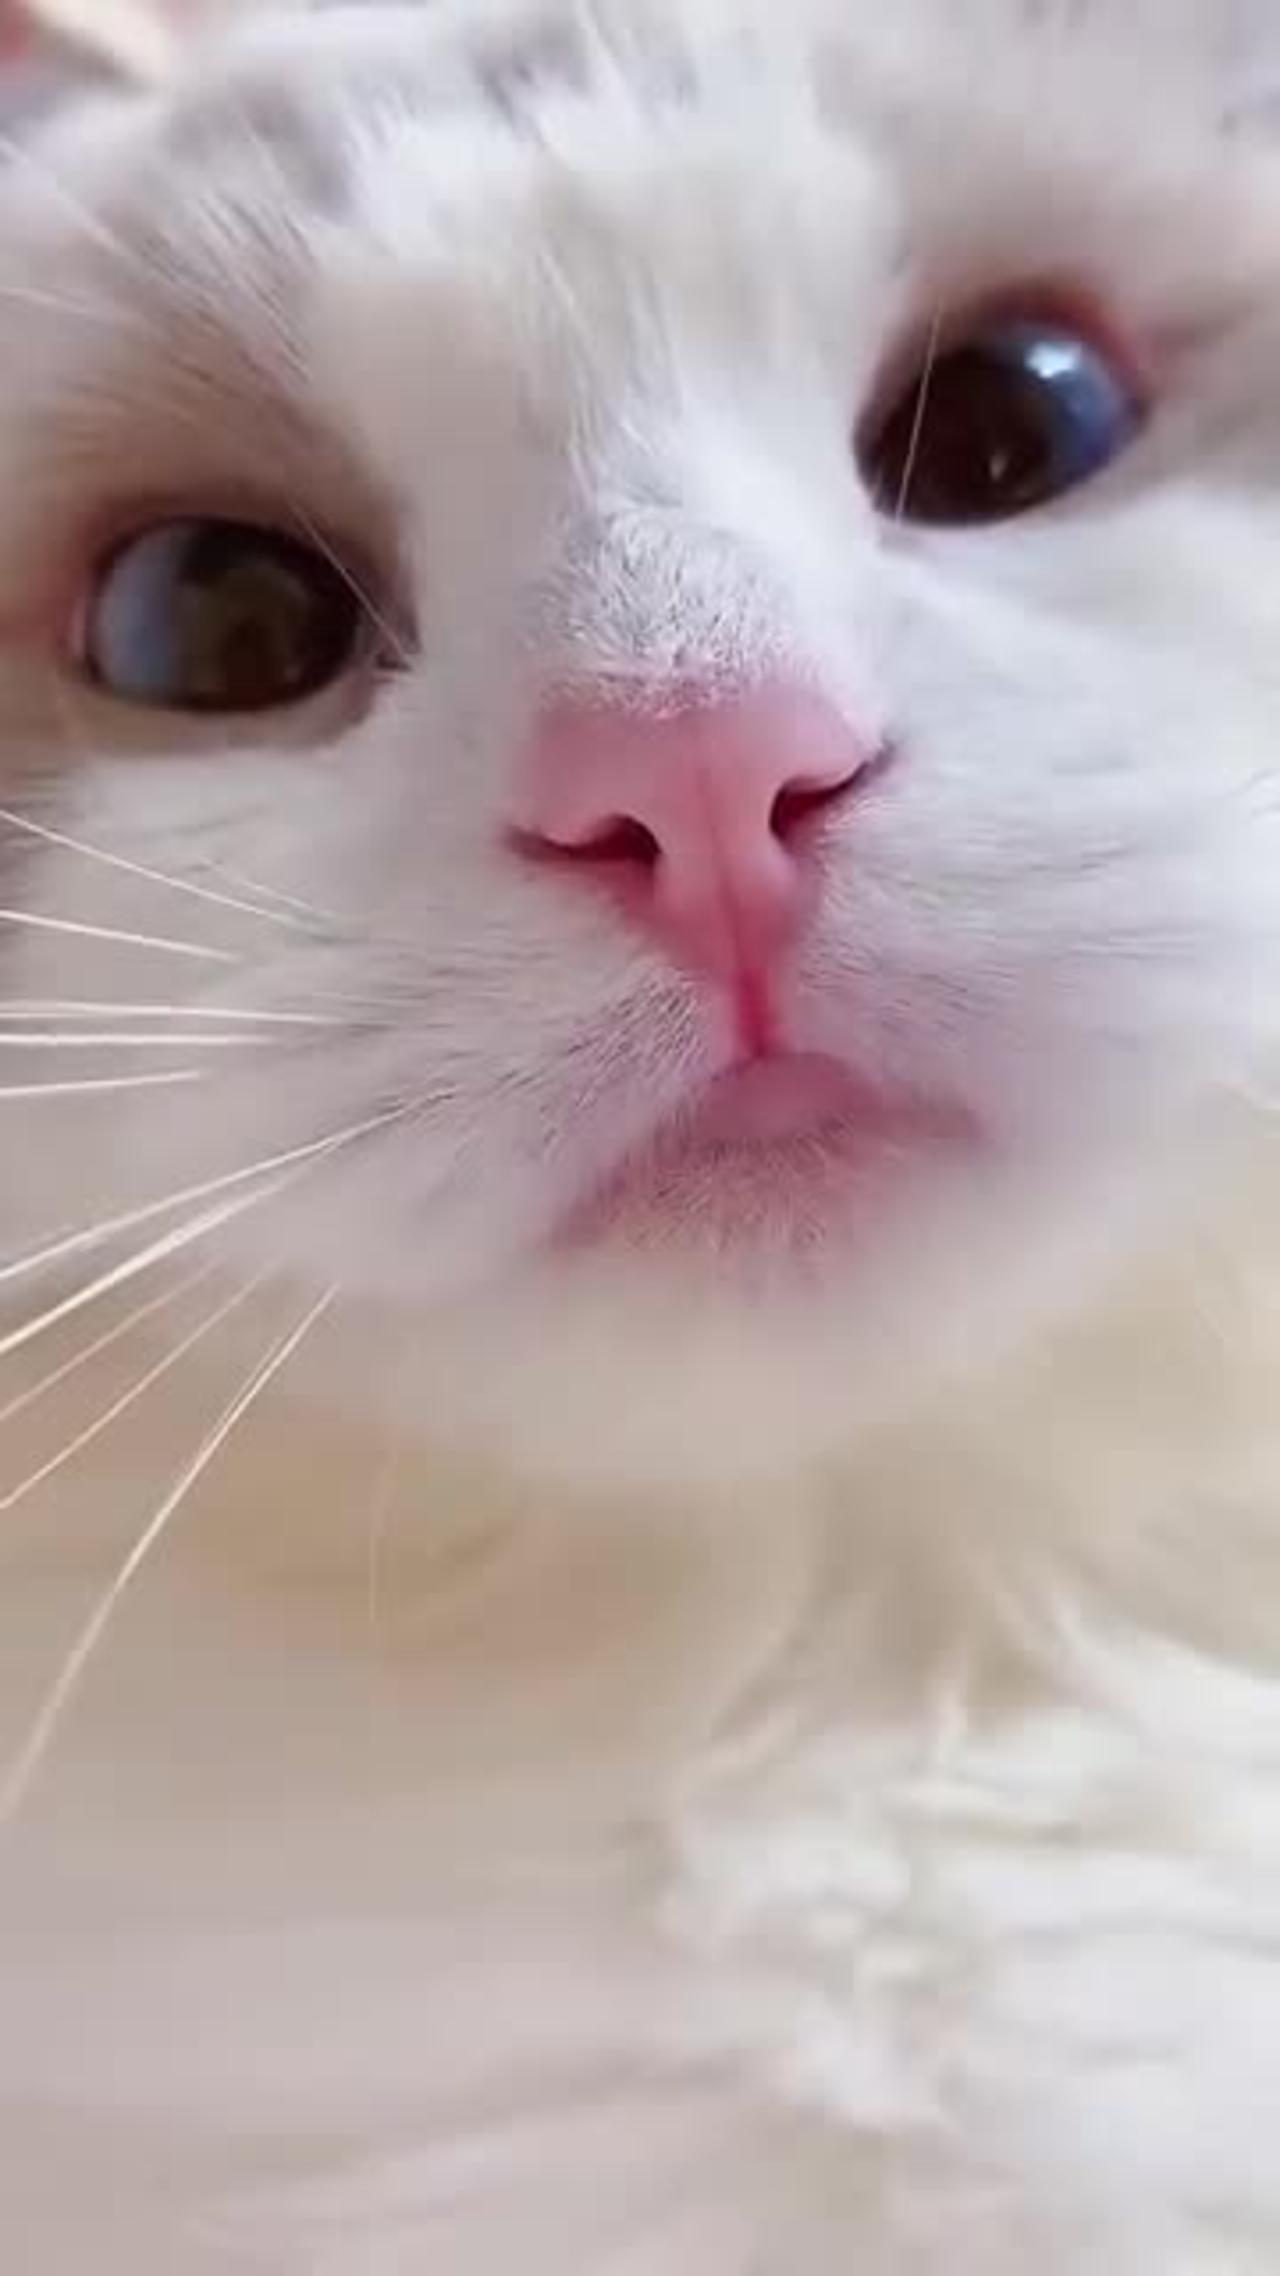 Short cat funny video